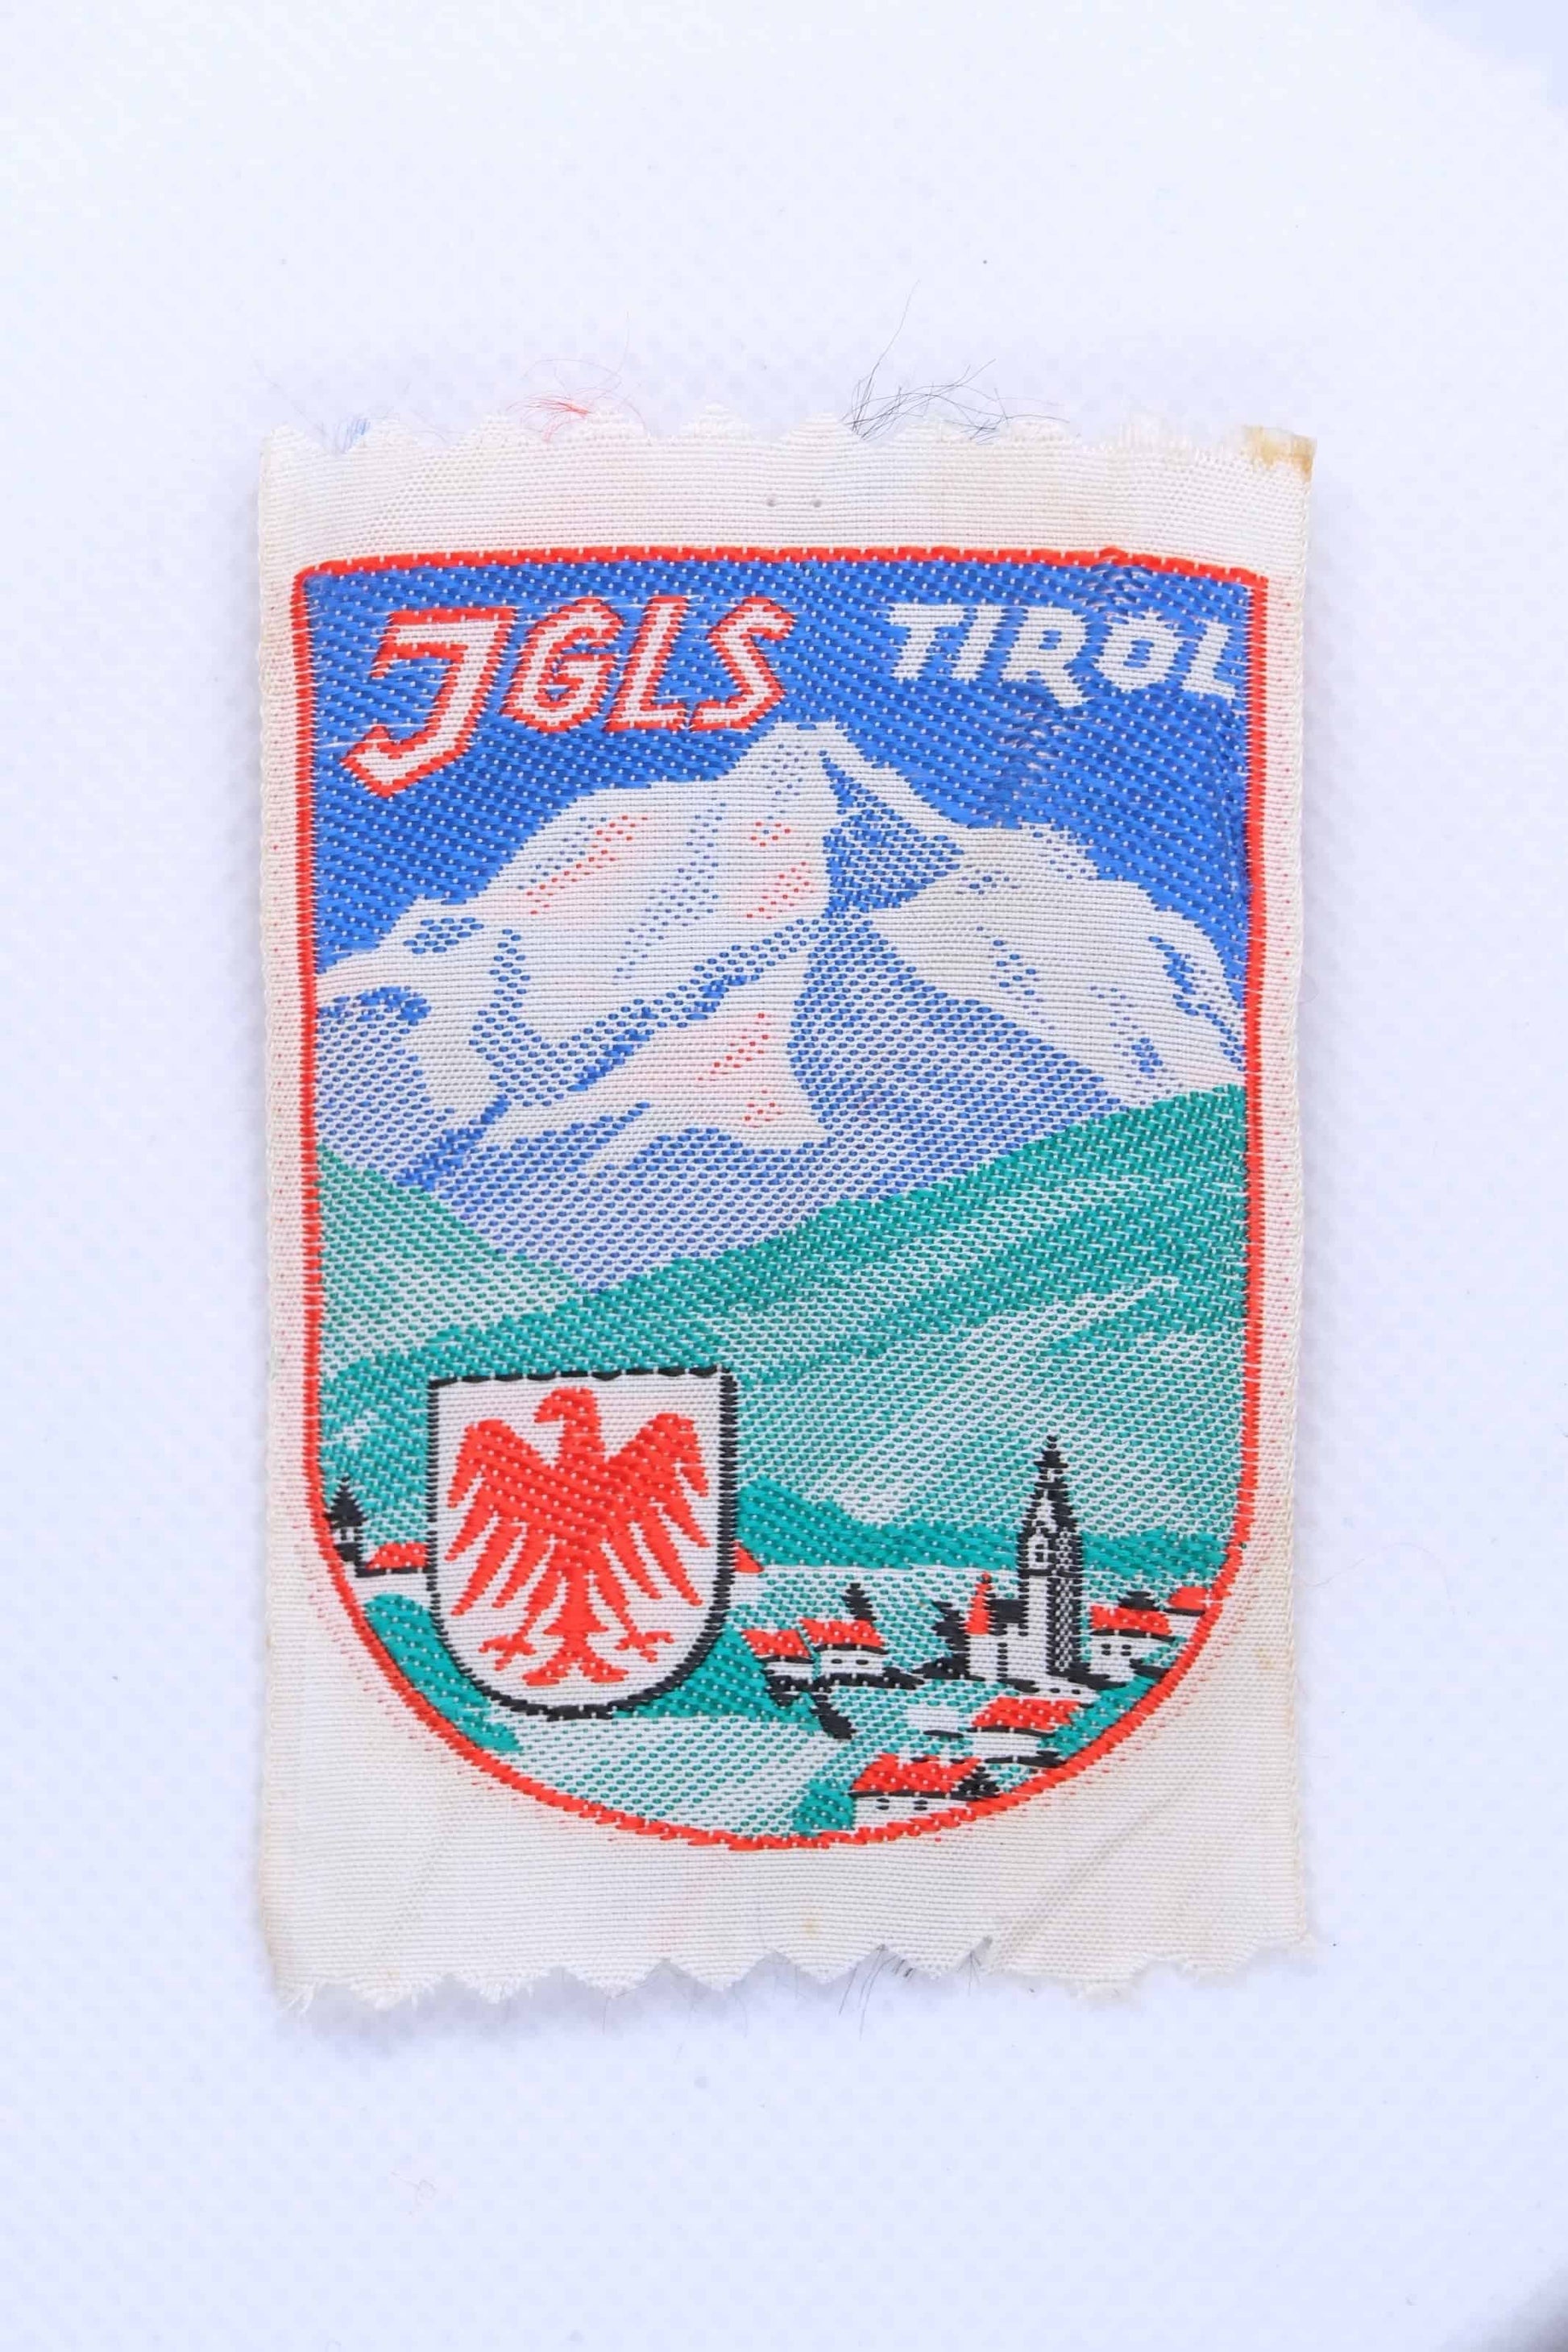 Vintage IGLS AUSTRIA Embroidered Ski Patch